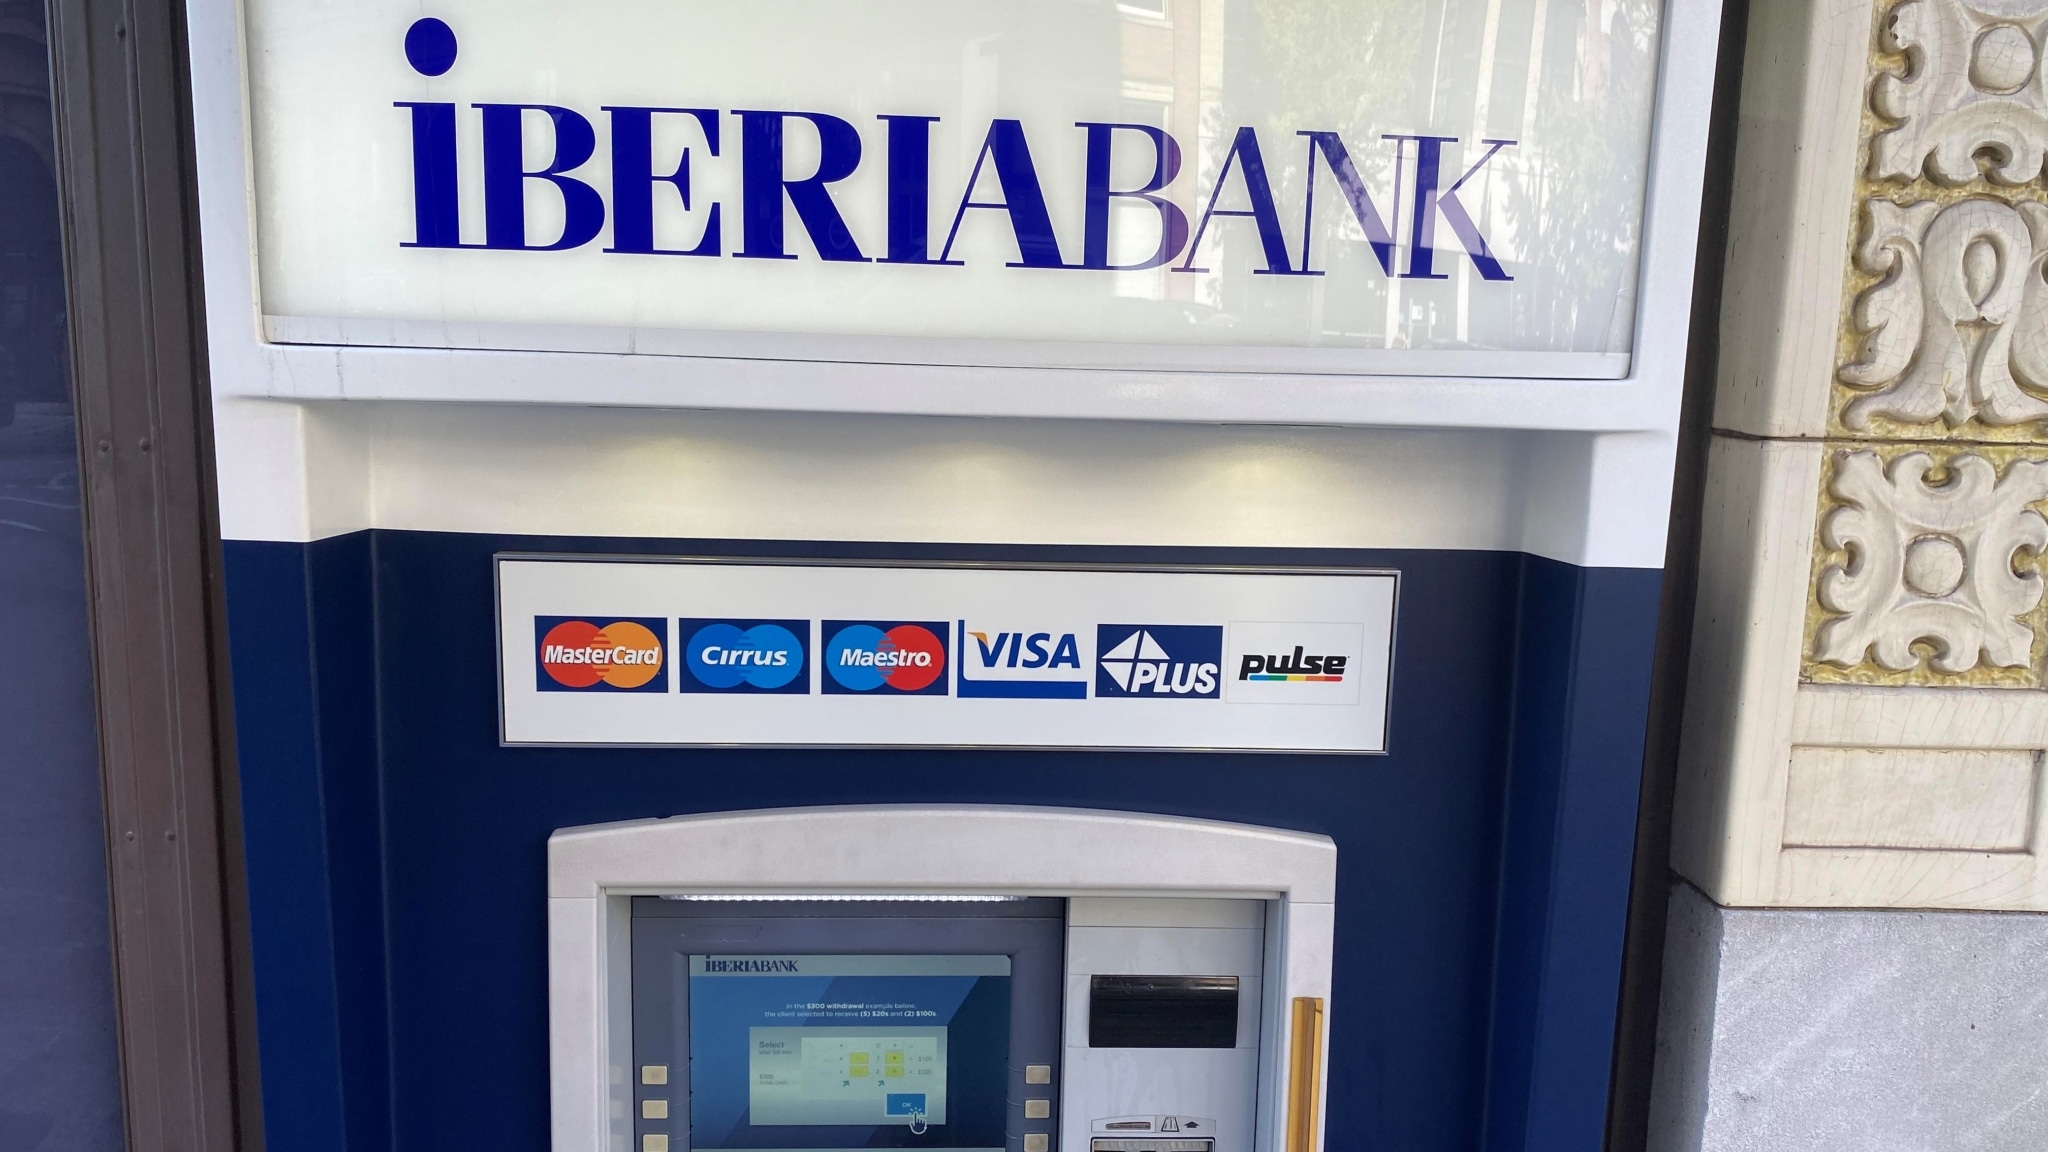 Photo of IBERIABANK ATM in Birmingham, Alabama